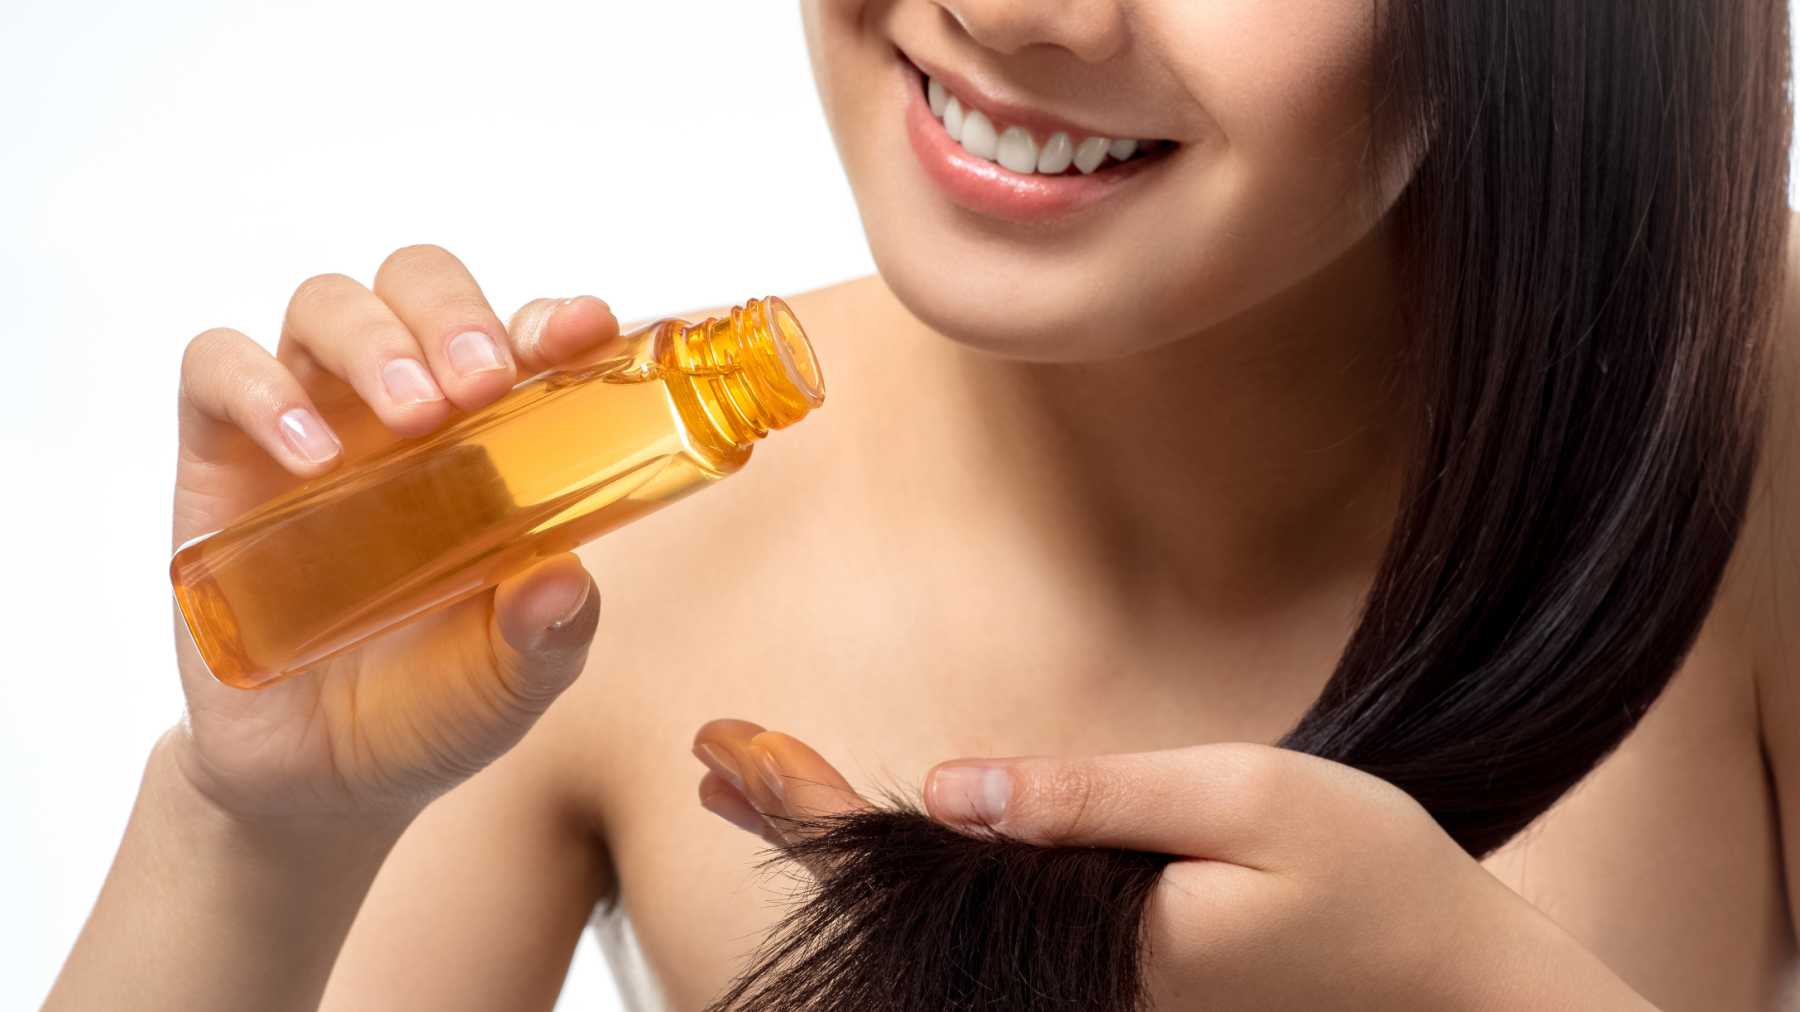 Dale vida al cabello con aceites comestibles | Diario 2001